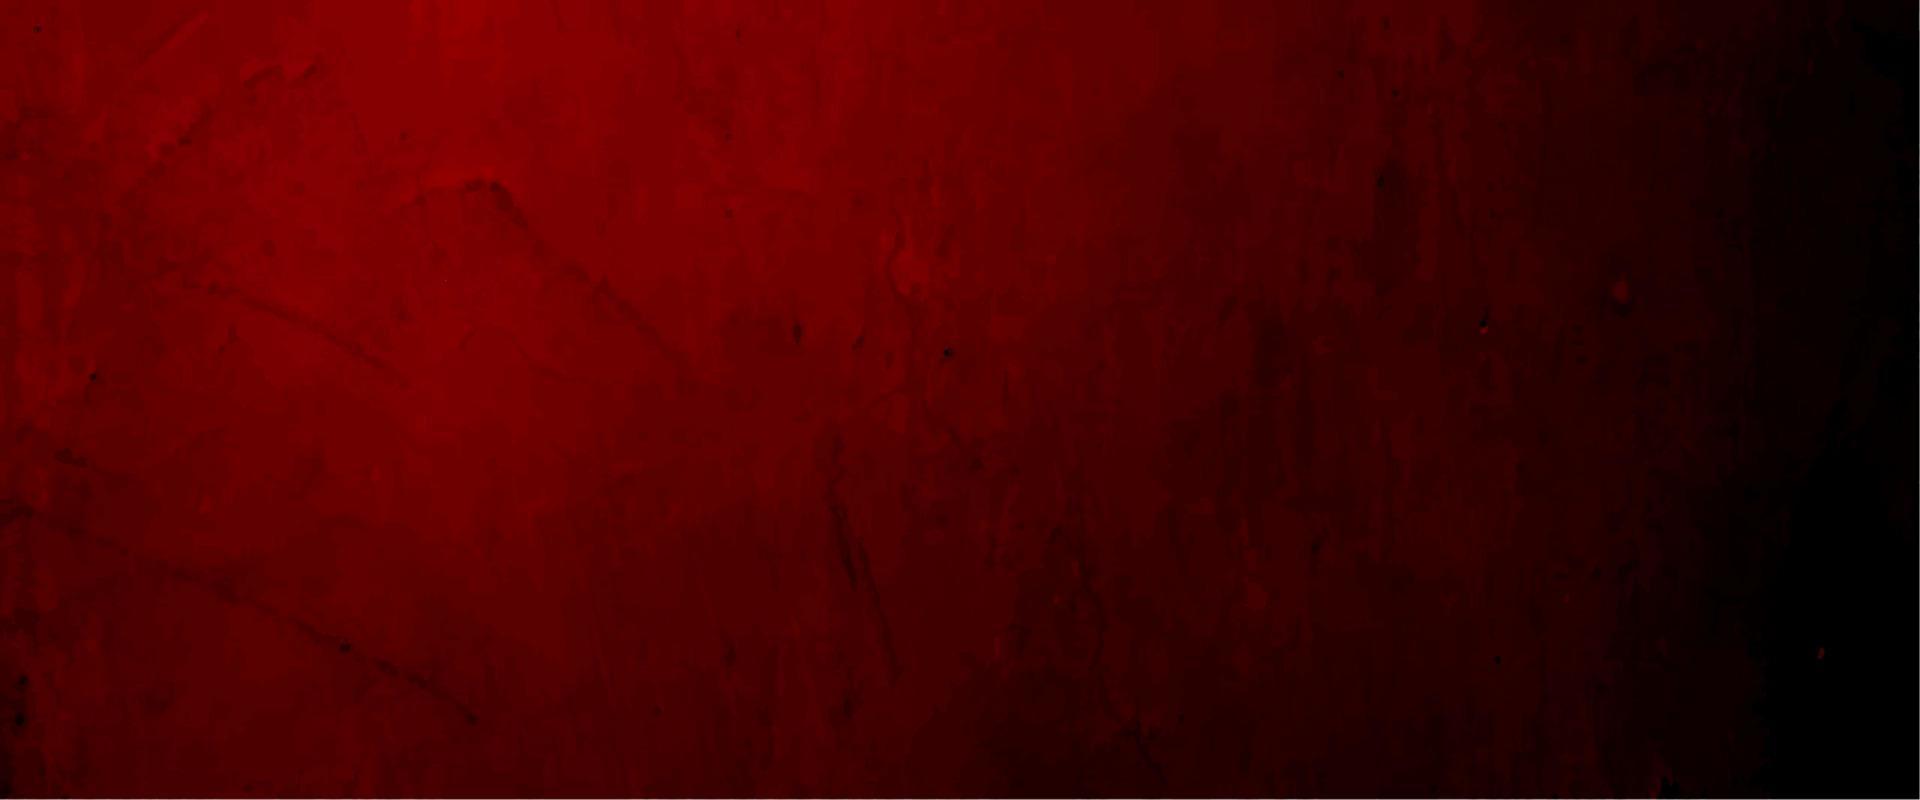 Abstract Dark Red Grunge Texture Background vector